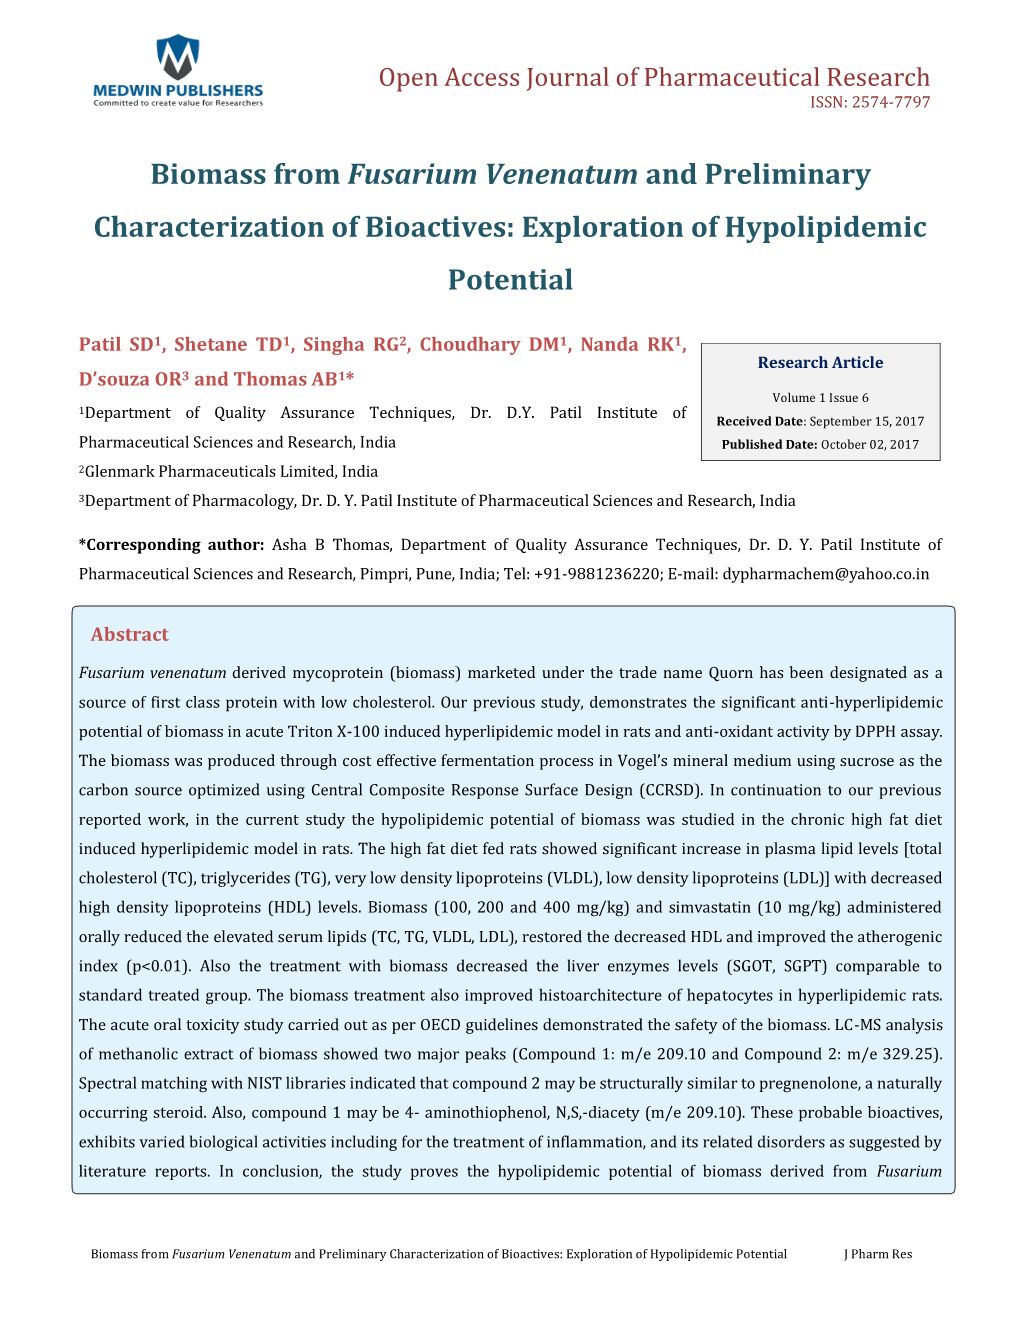 Biomass from Fusarium Venenatum and Preliminary Characterization of Bioactives: Exploration of Hypolipidemic Potential